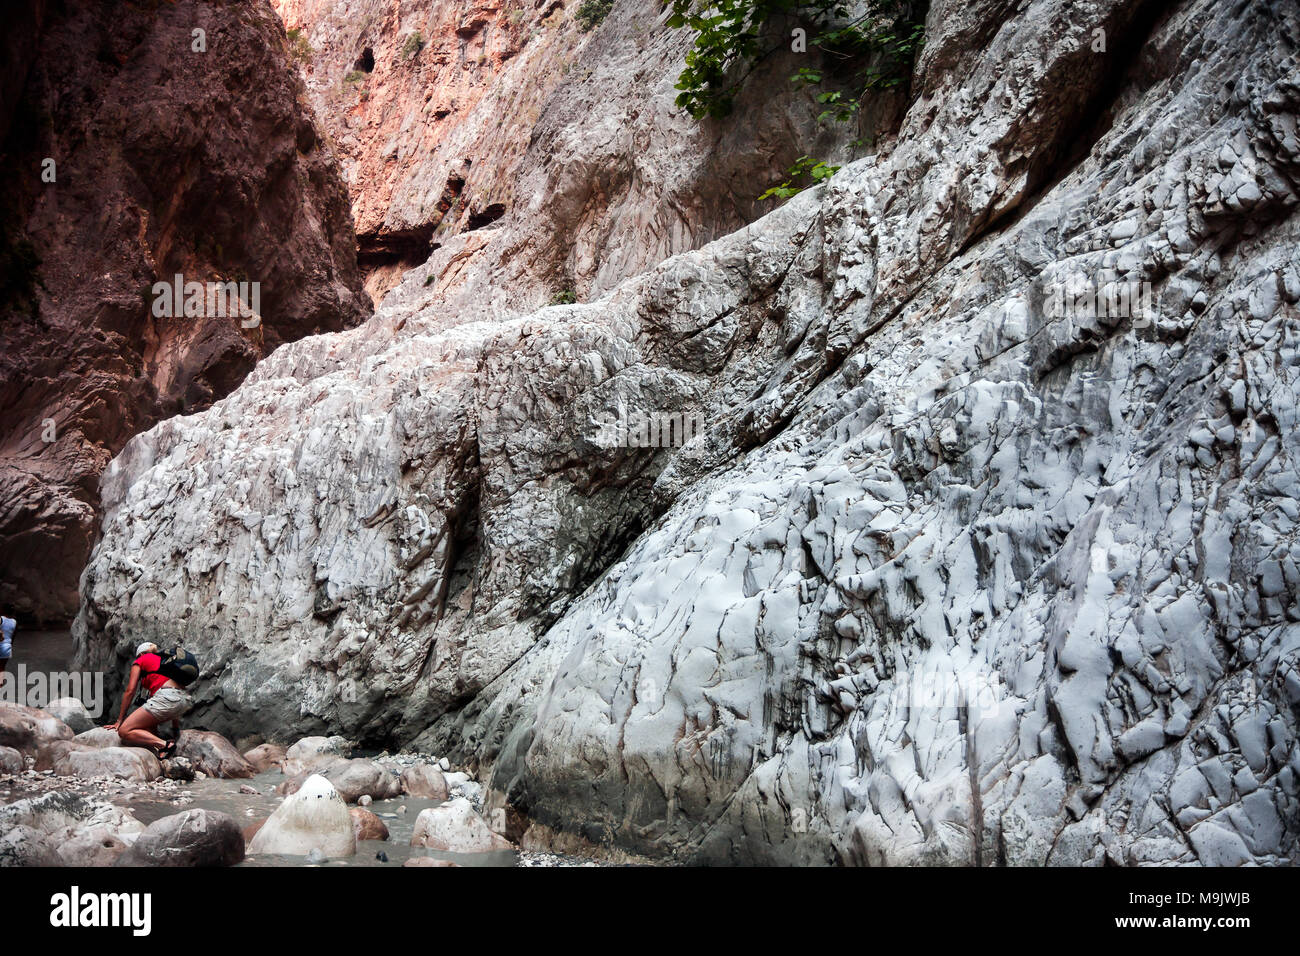 Trekking in the Saklikent Canyon stone mountains and rocks, Turkey Stock Photo